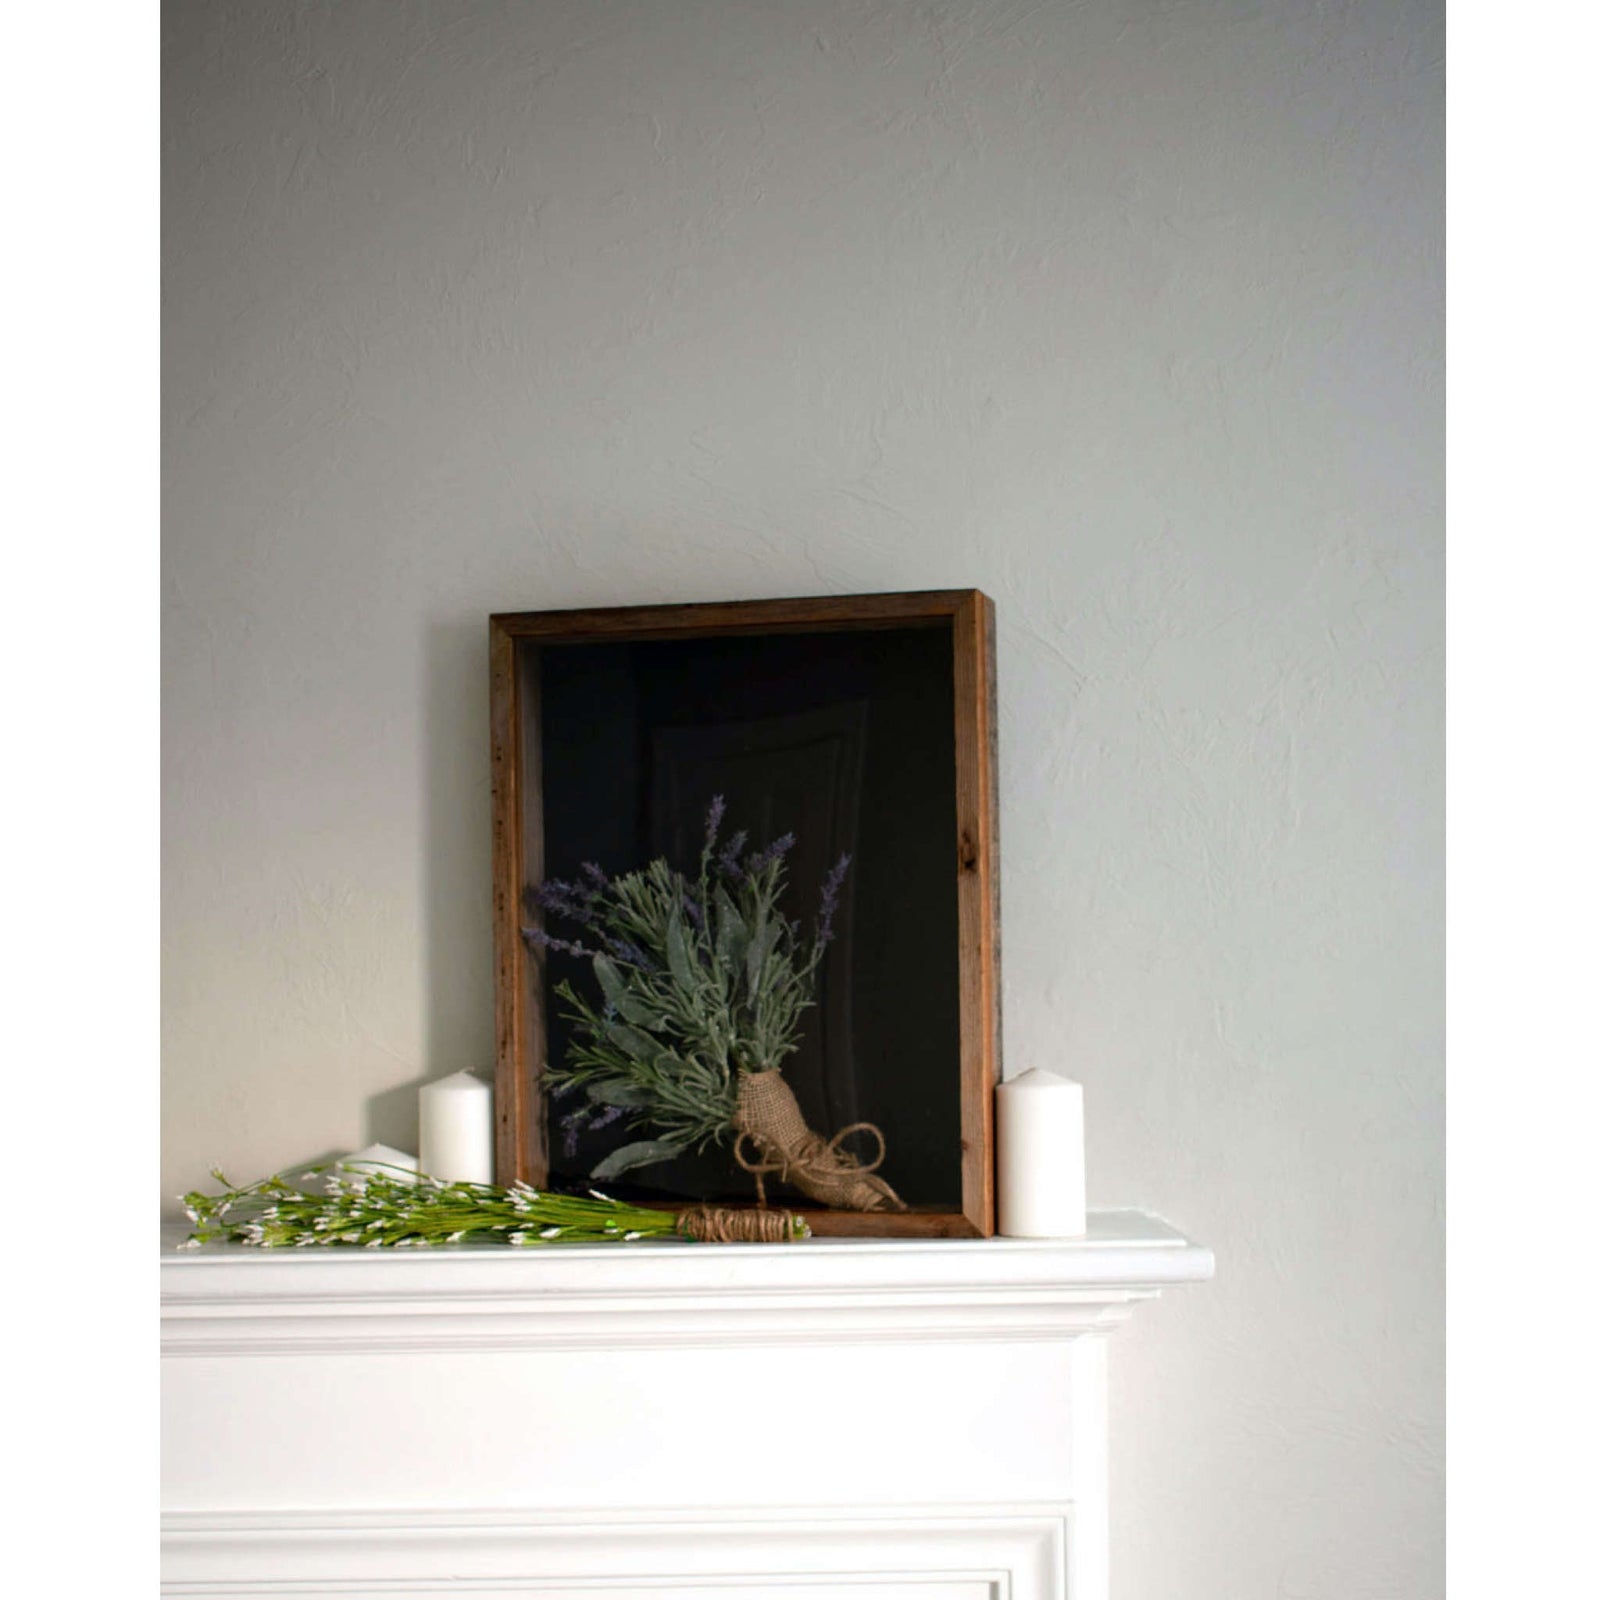 12” X 12” Rustic Gray Wood Shadow Box Frame